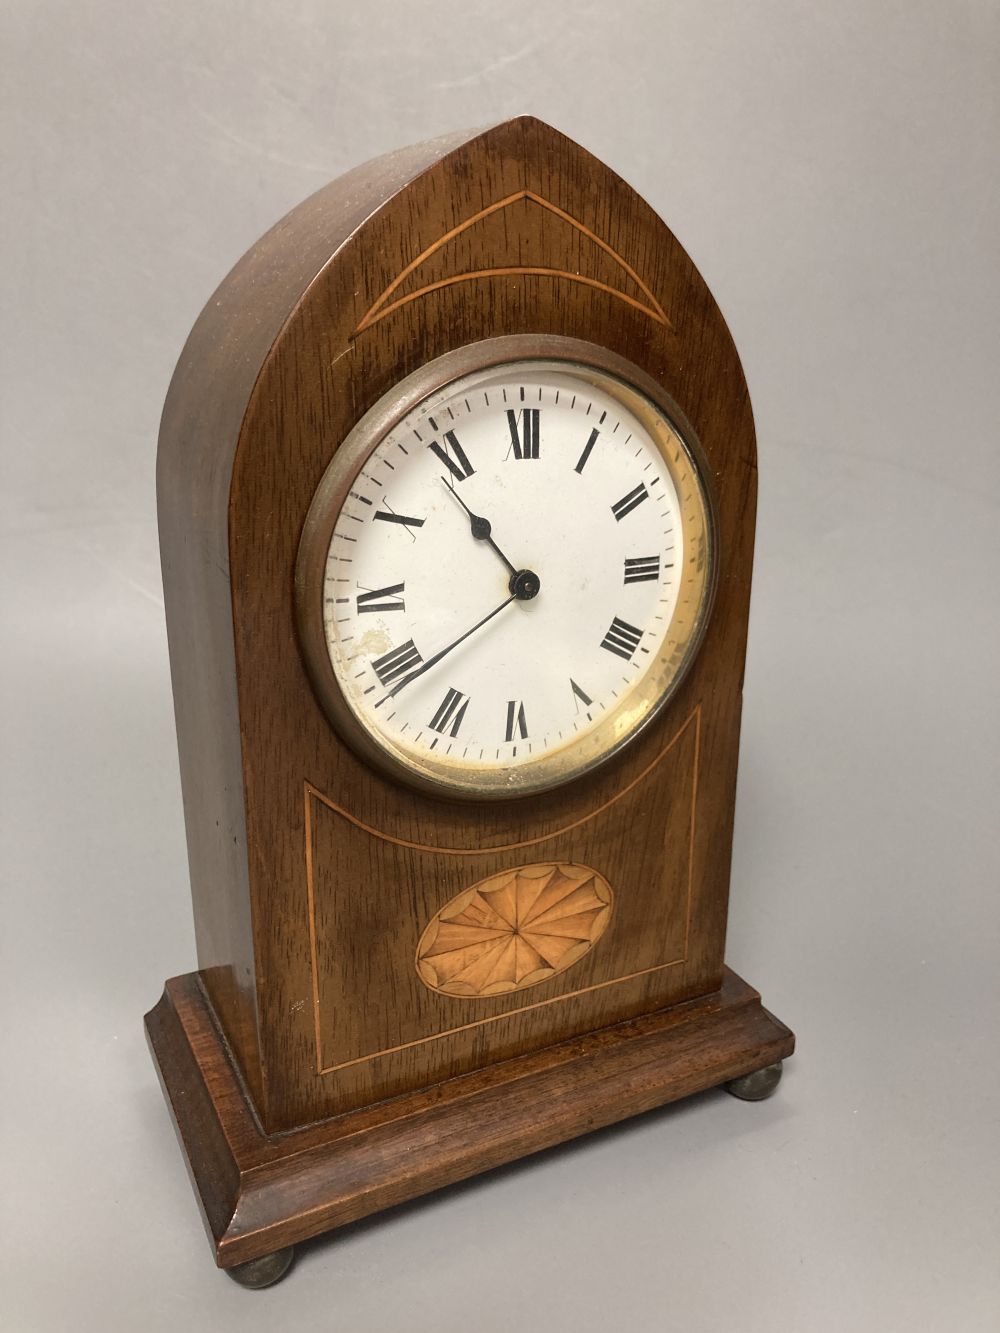 An Edwardian shell inlaid domed top mahogany mantel clock, height 23cm